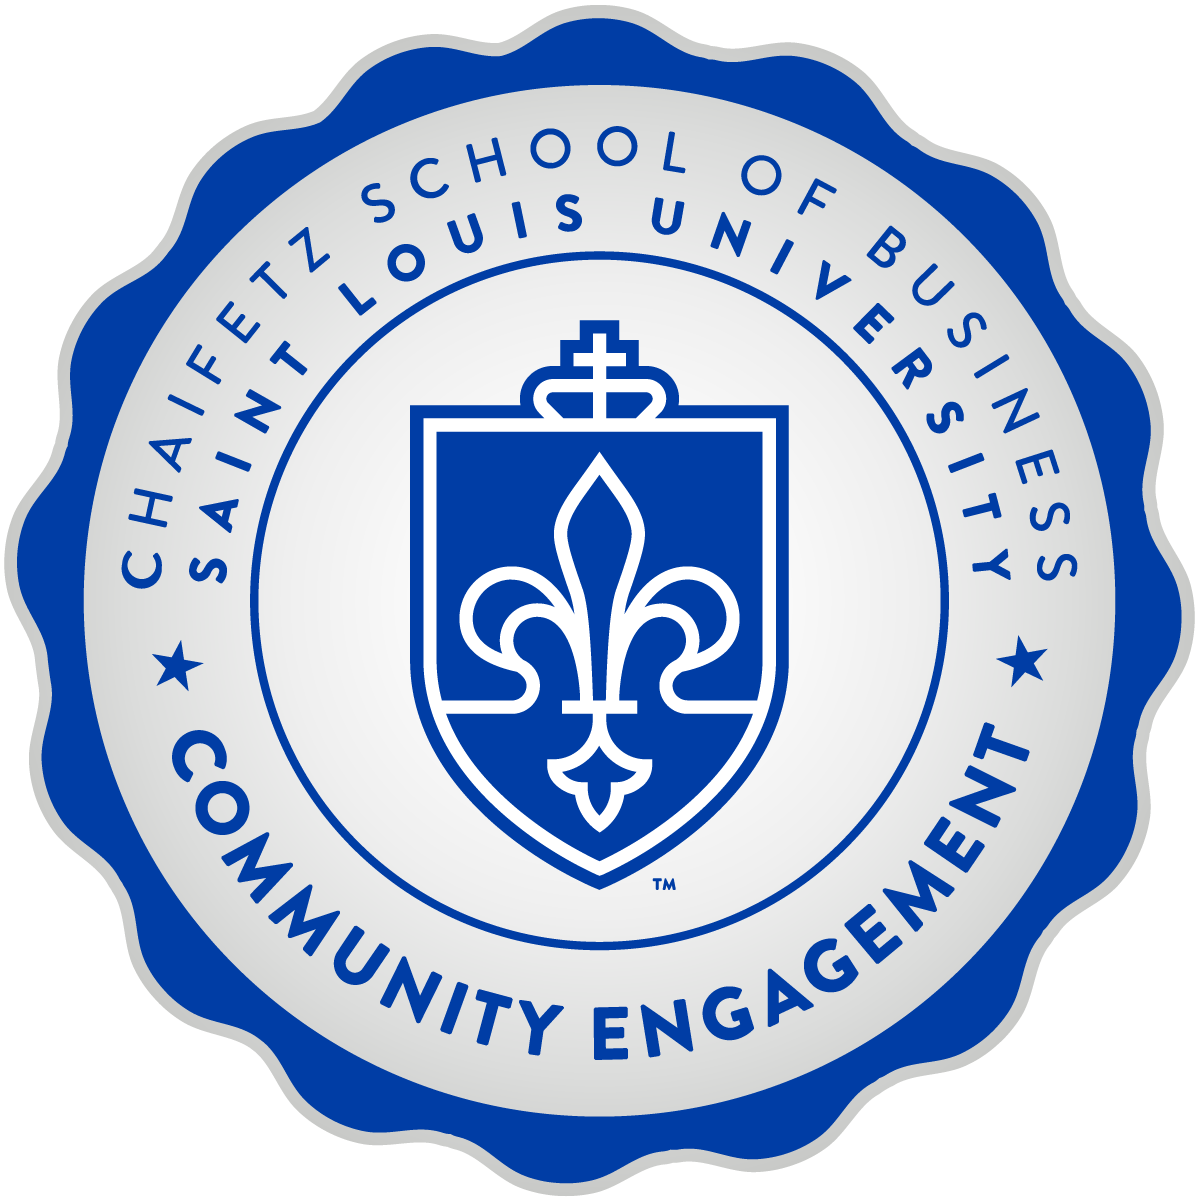 Community Engagement Digital Badge Reading "Chaifets School of Business Saint Louis University - Community Engagement"